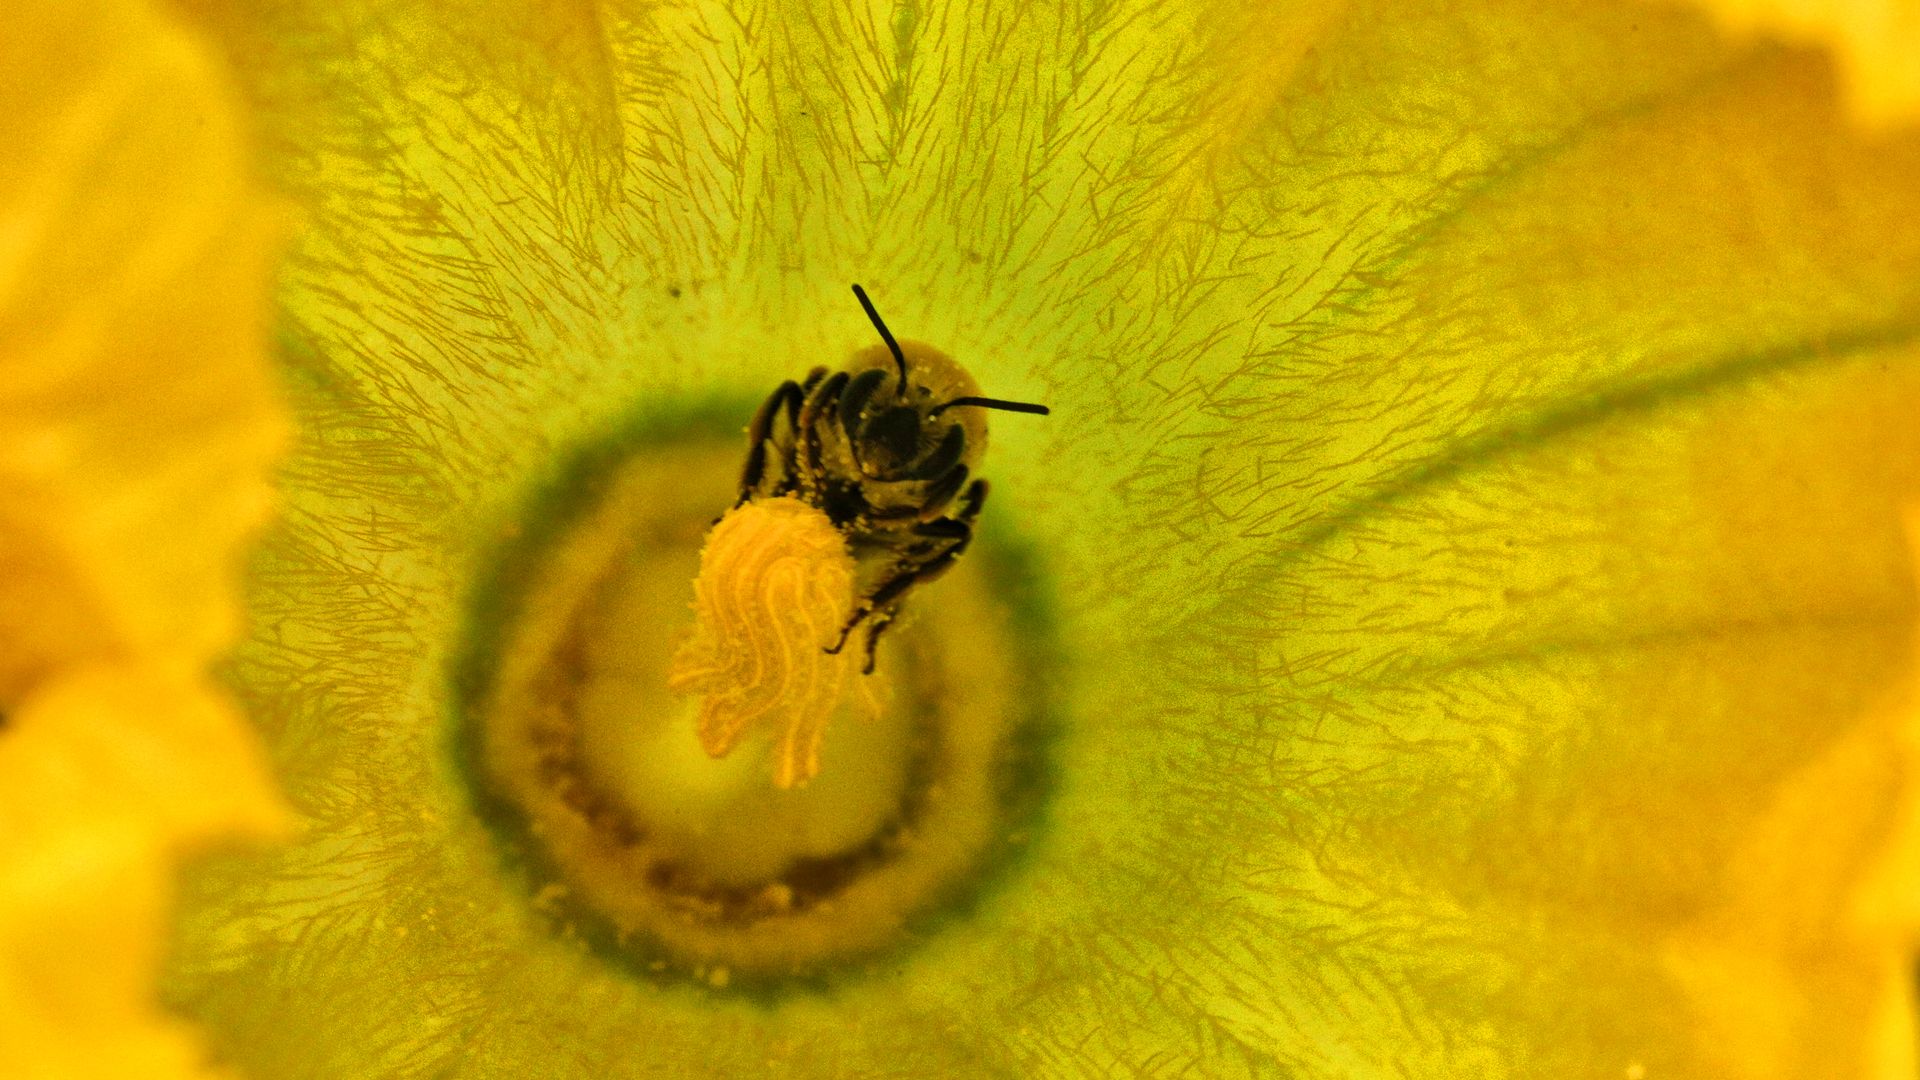 A honeybee pollinating a squash plant flower.